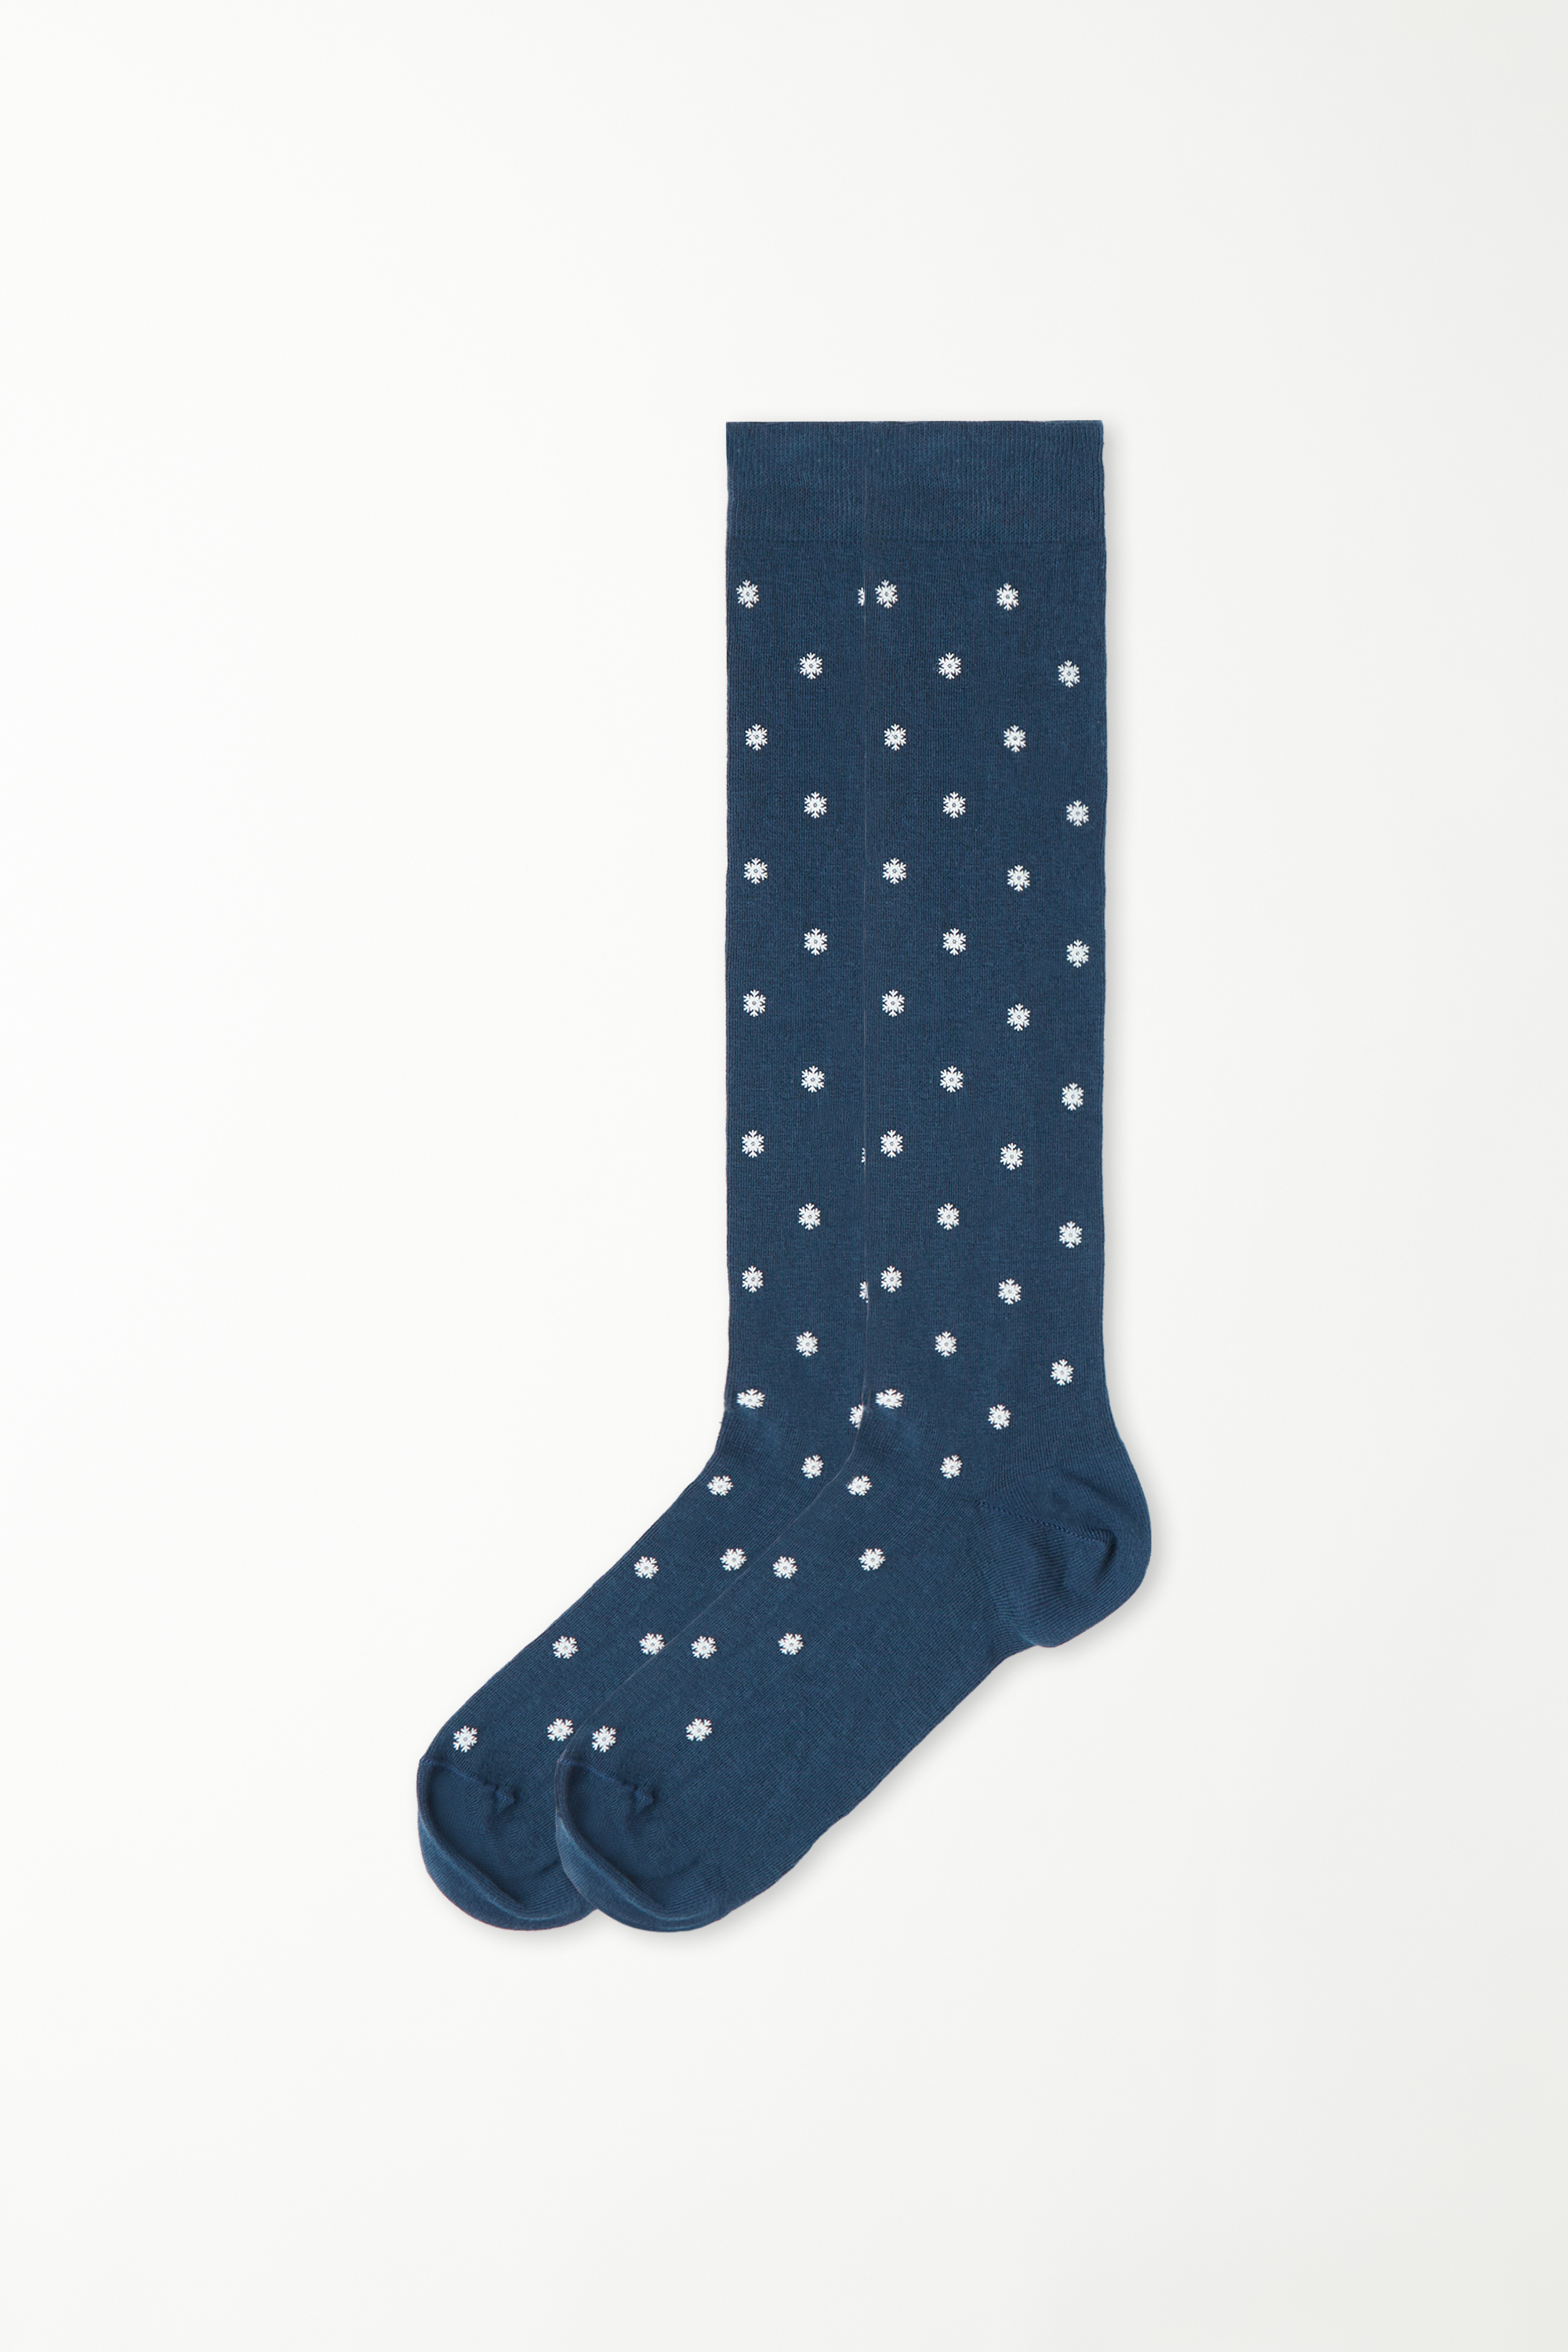 Mens’ Long Printed Cotton Socks